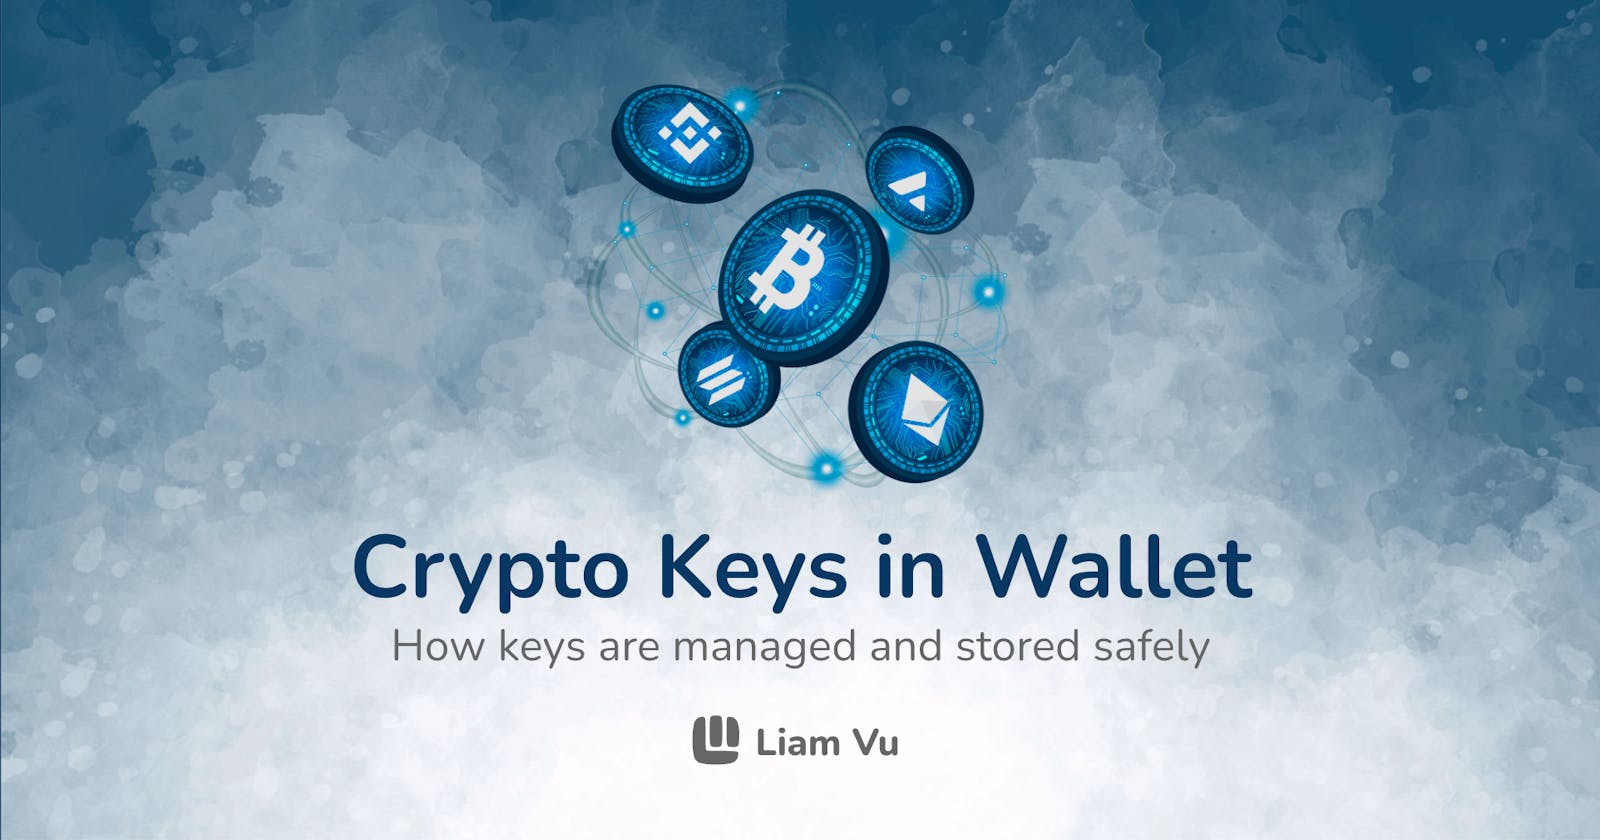 Understand Crypto Keys in Wallet